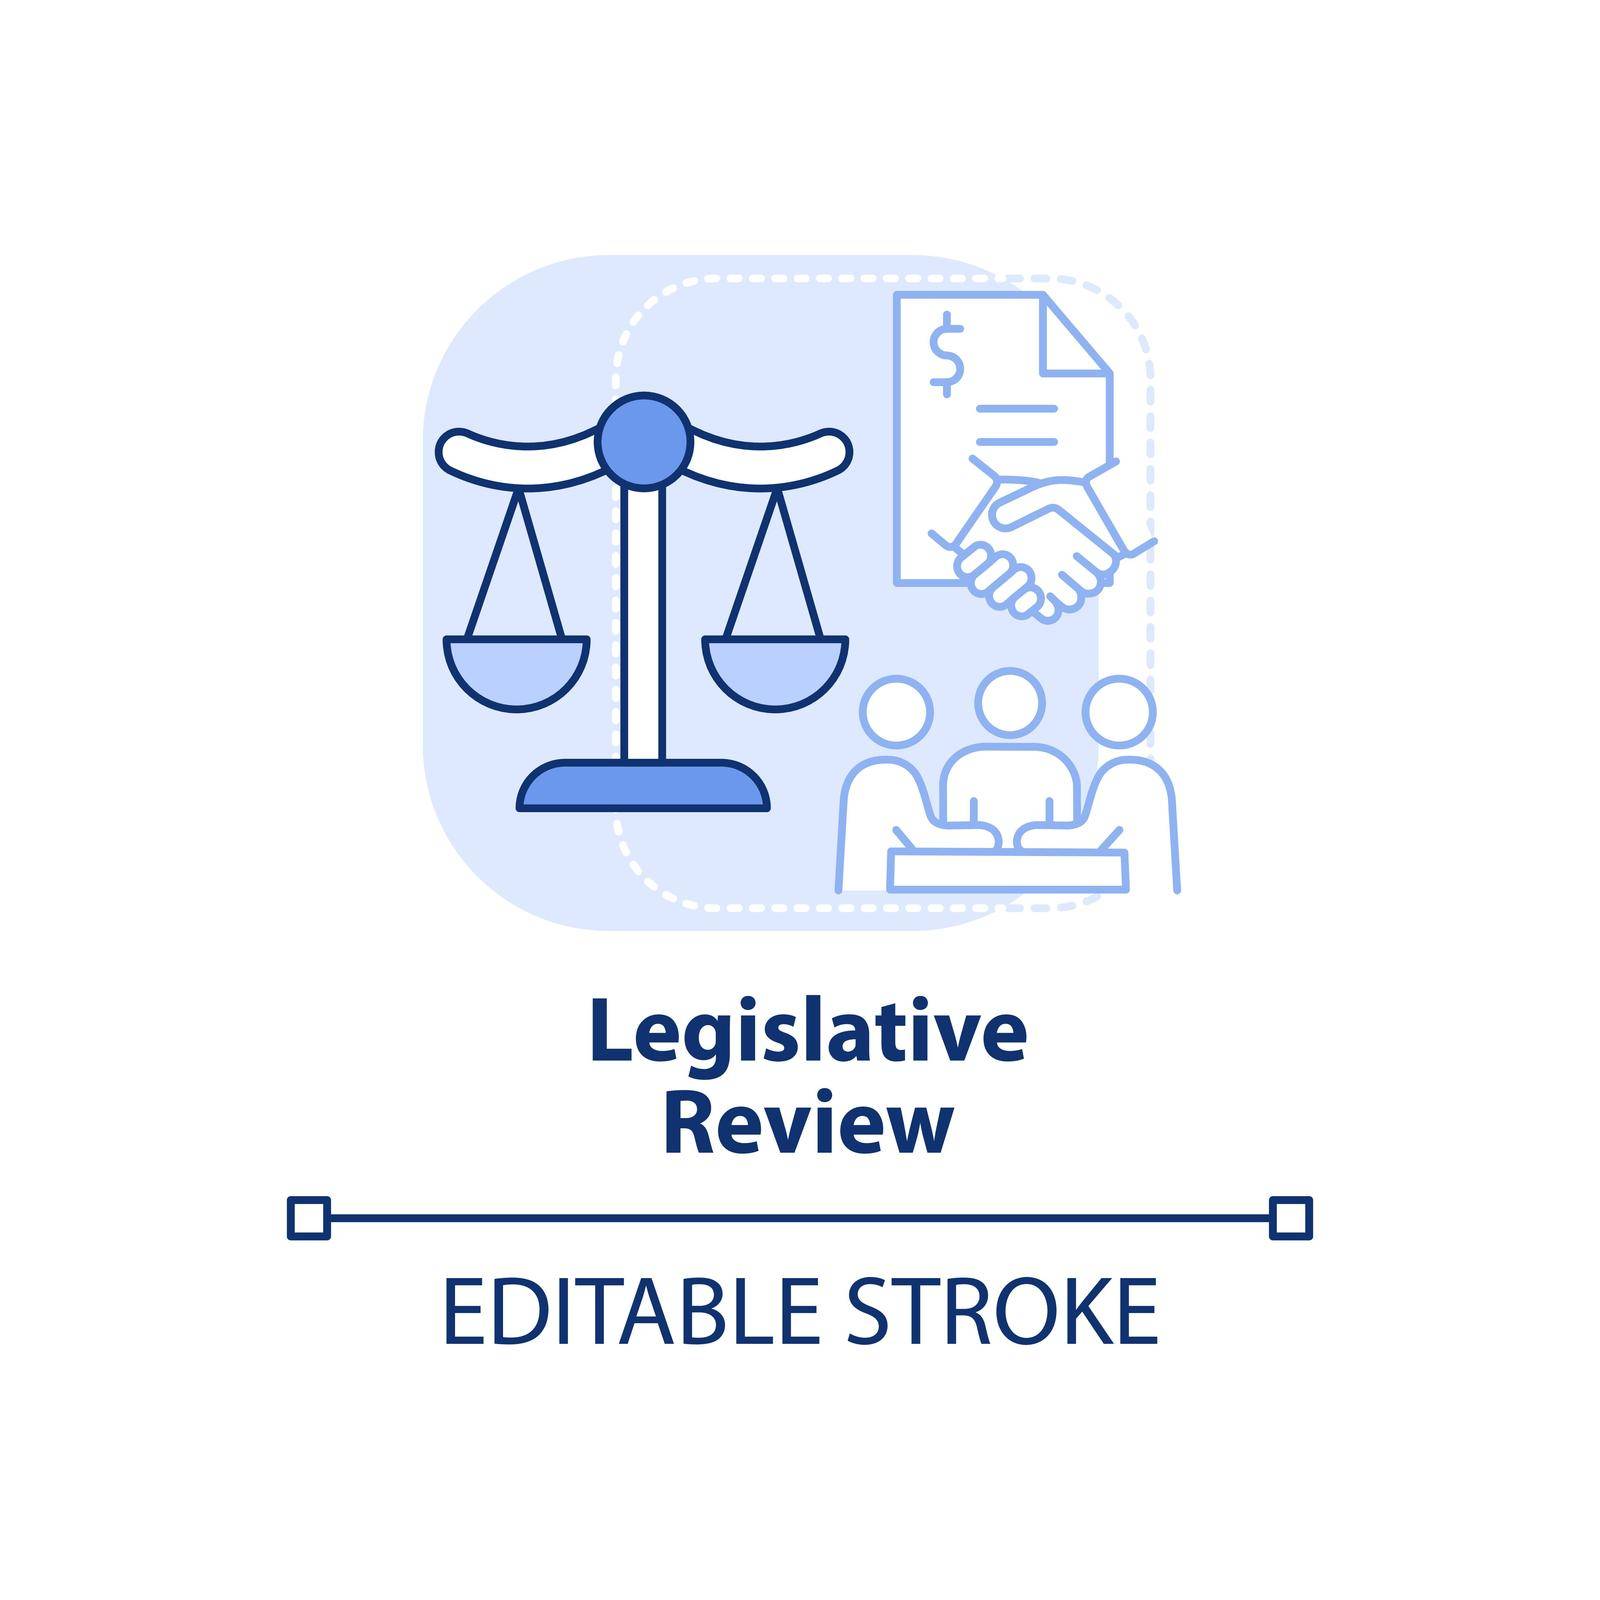 Legislative review light blue concept icon by bsd